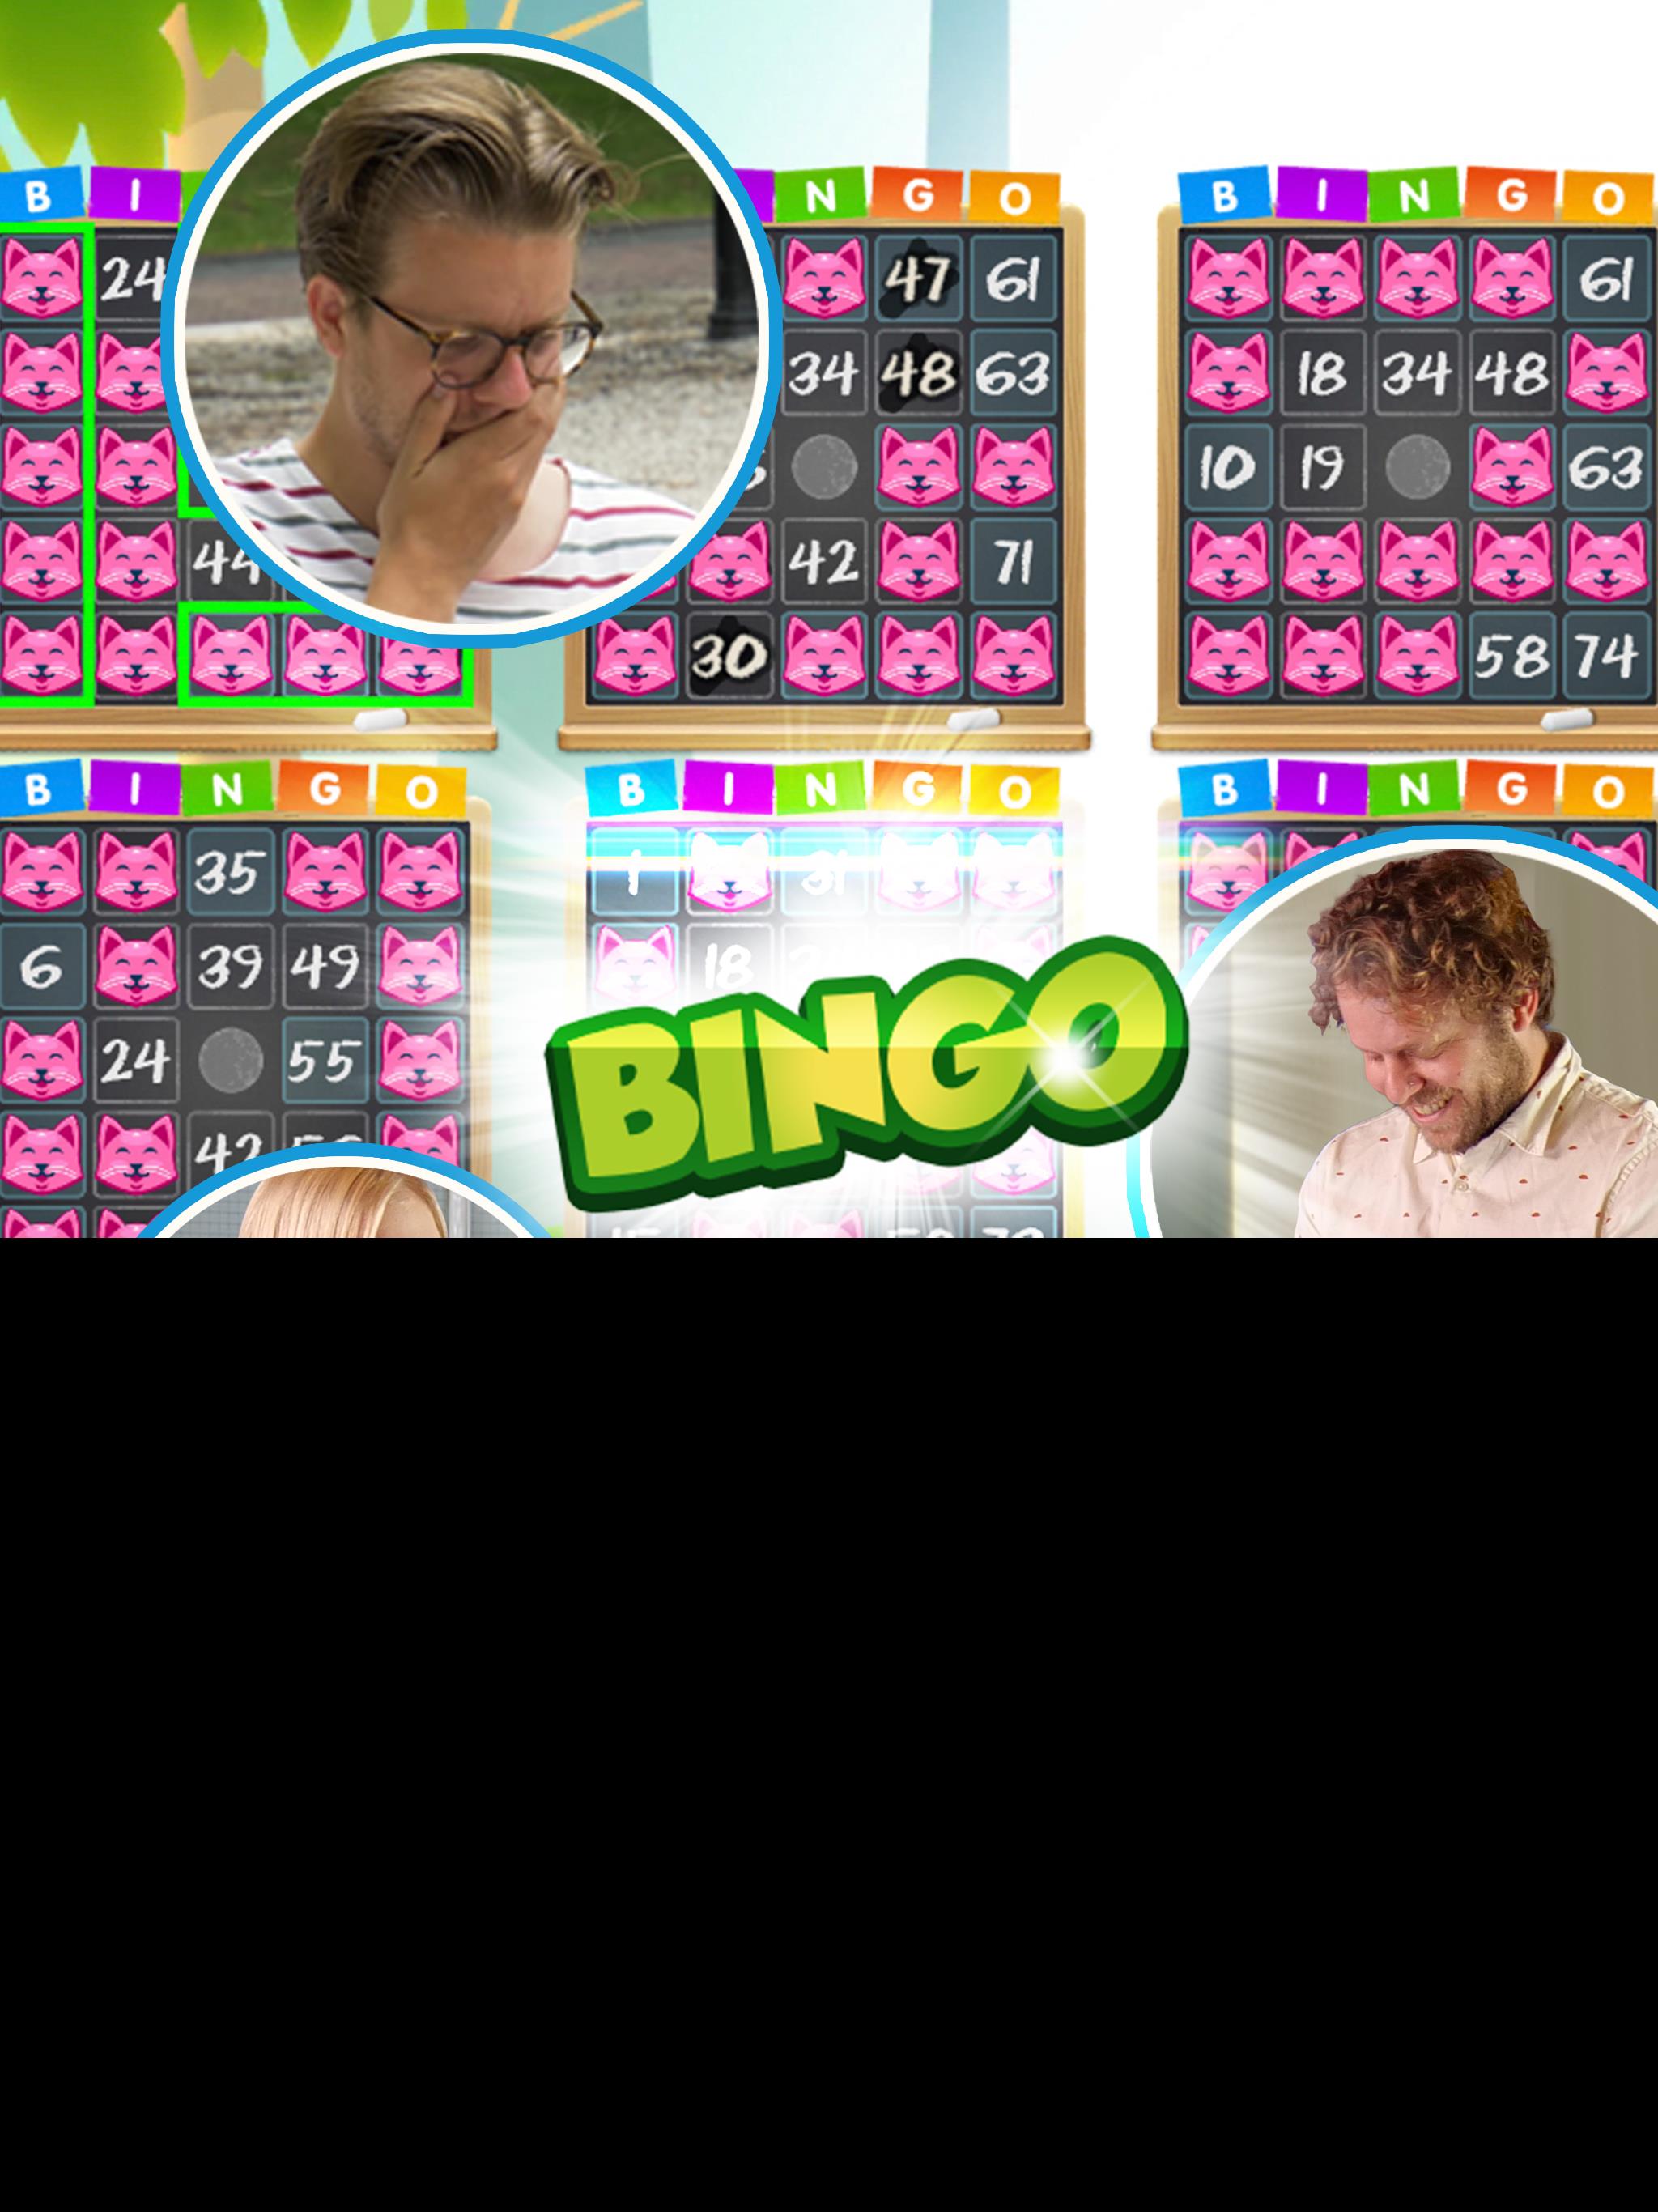 GamePoint Bingo - Bingo games Screenshot 9